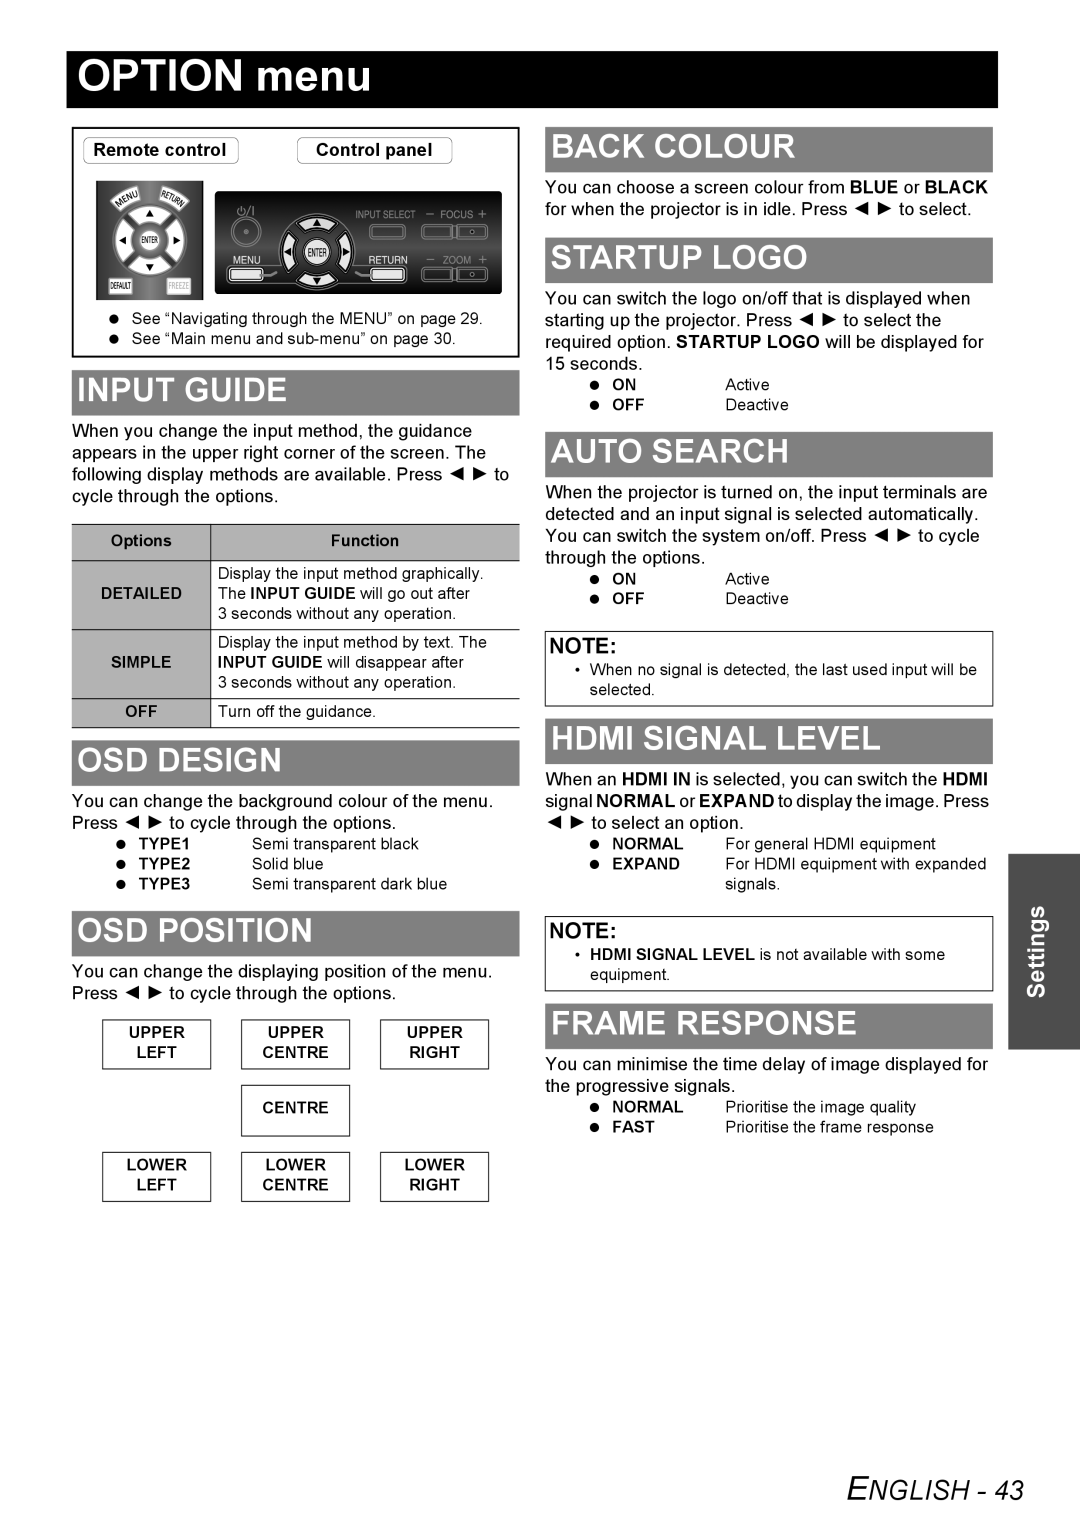 Panasonic PT-AE3000E manual OPTION menu, Input Guide, Osd Design, Back Colour, Startup Logo, Auto Search, Hdmi Signal Level 